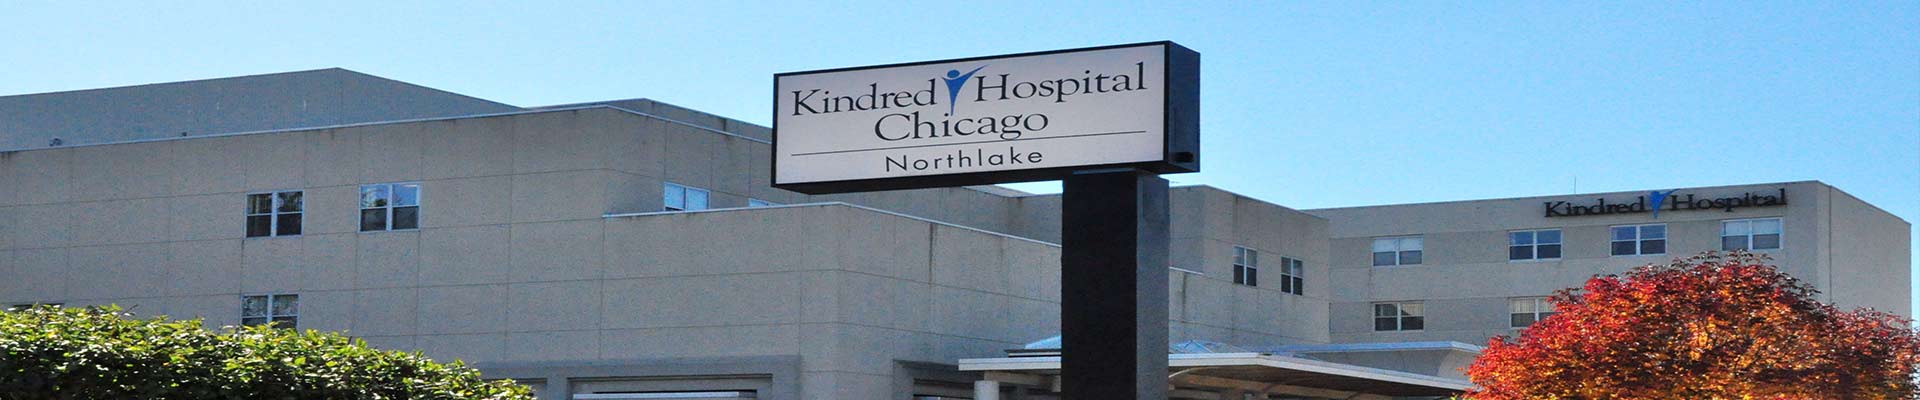 Kindred Hospital Chicago Northlake